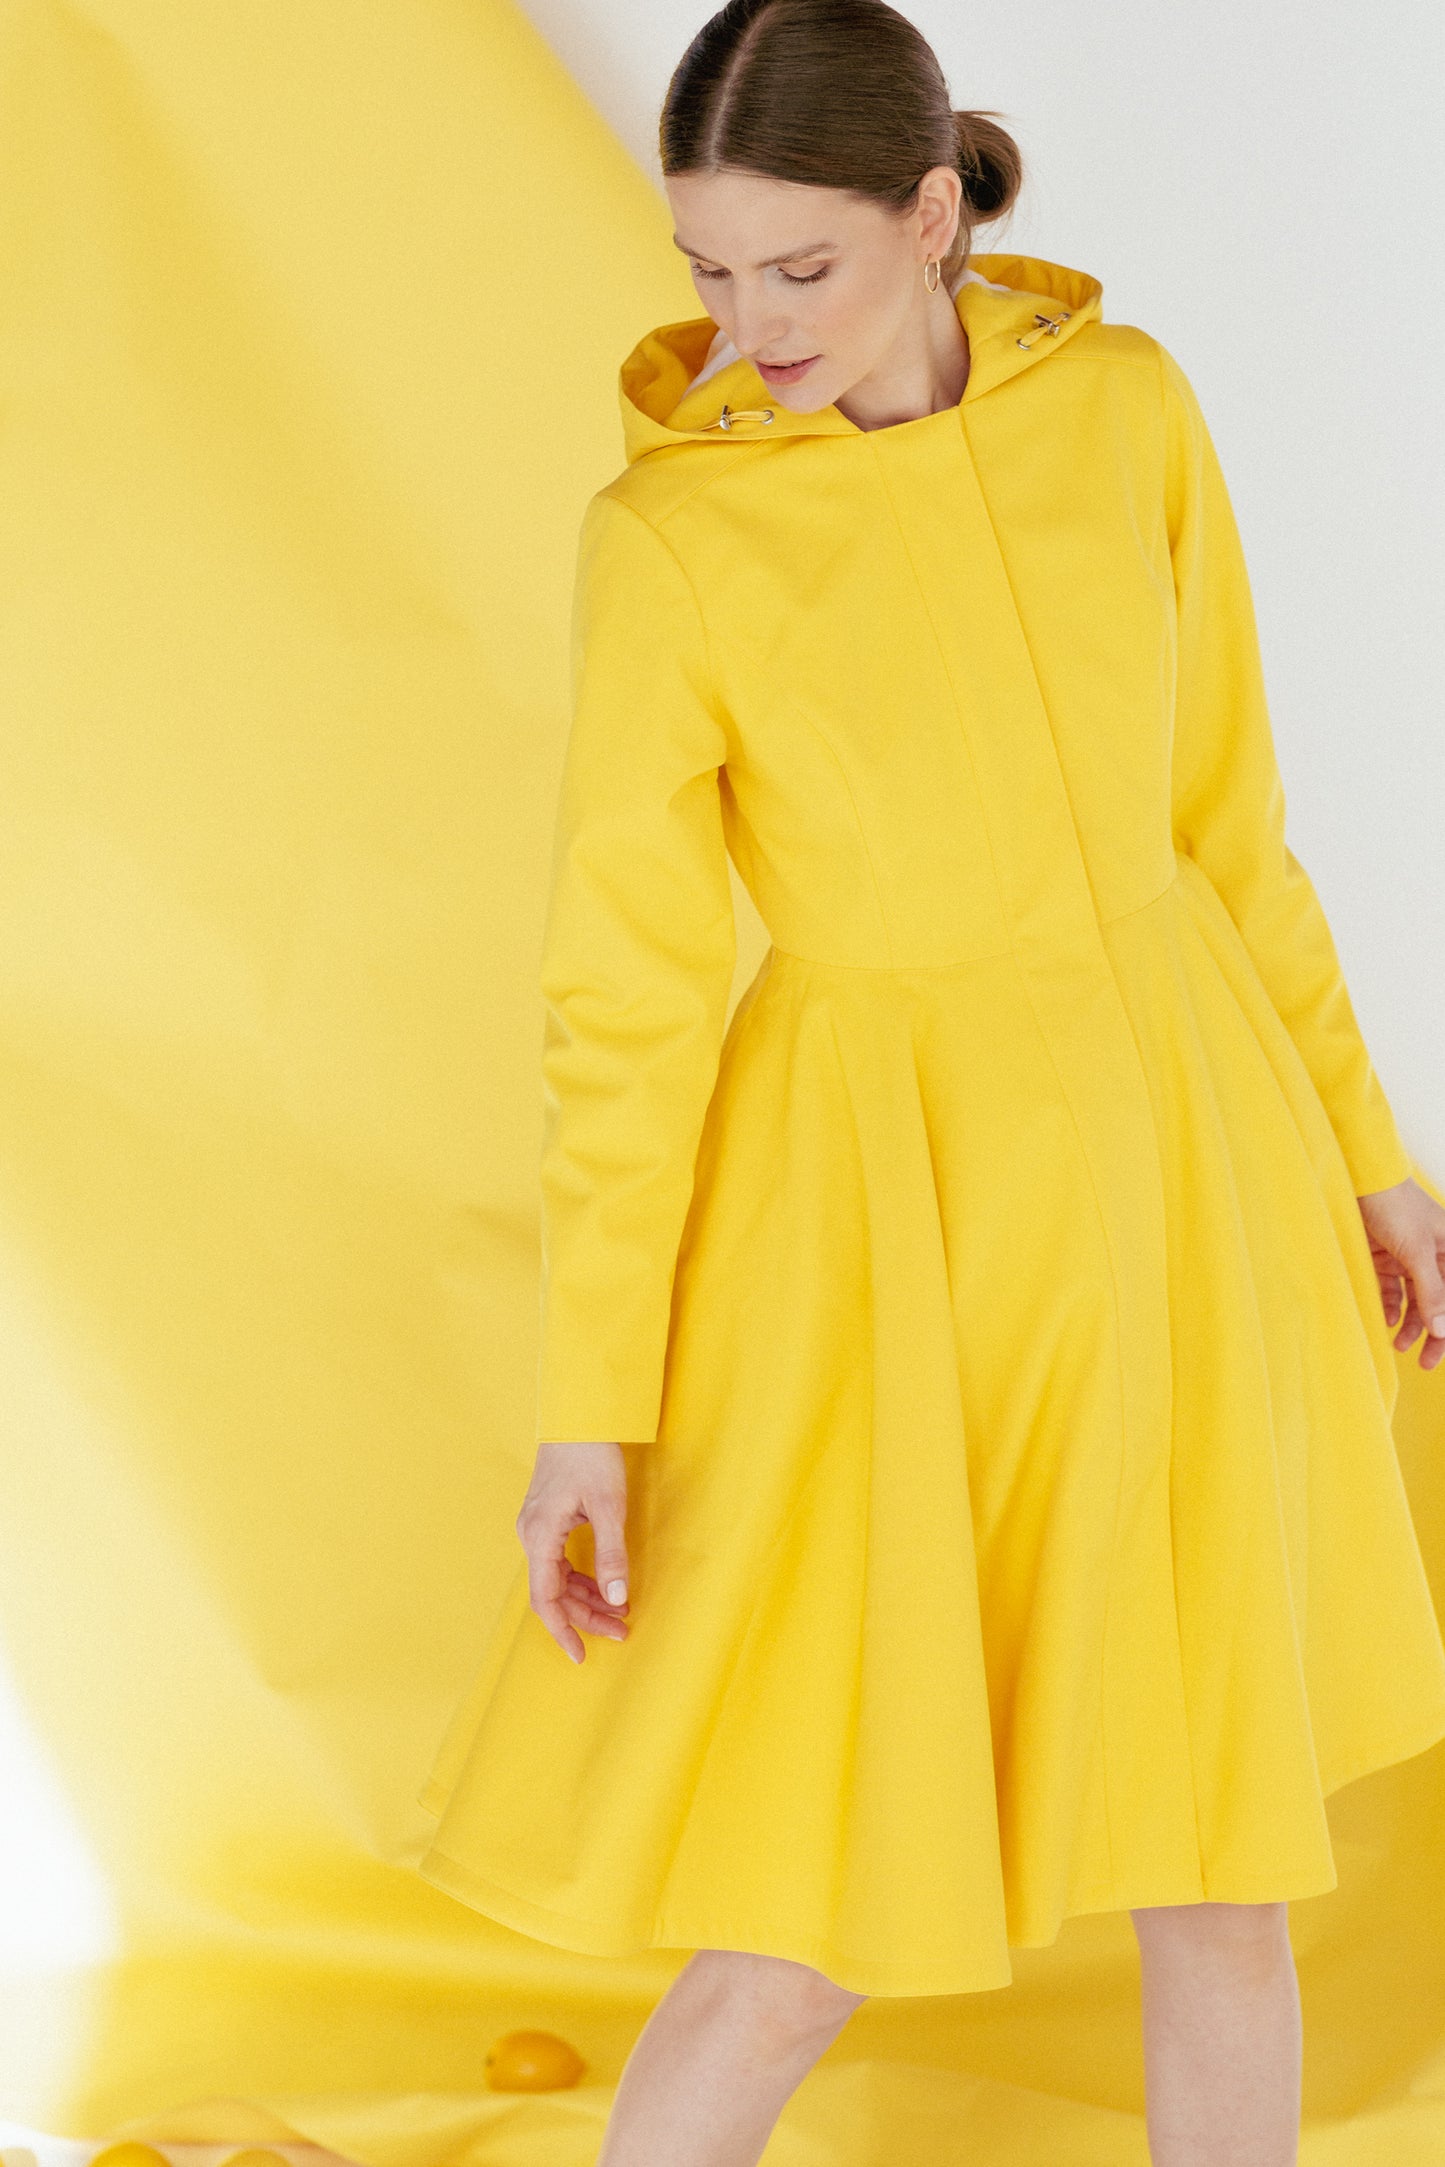 Yellow Raincoat for Women with full volume skirts